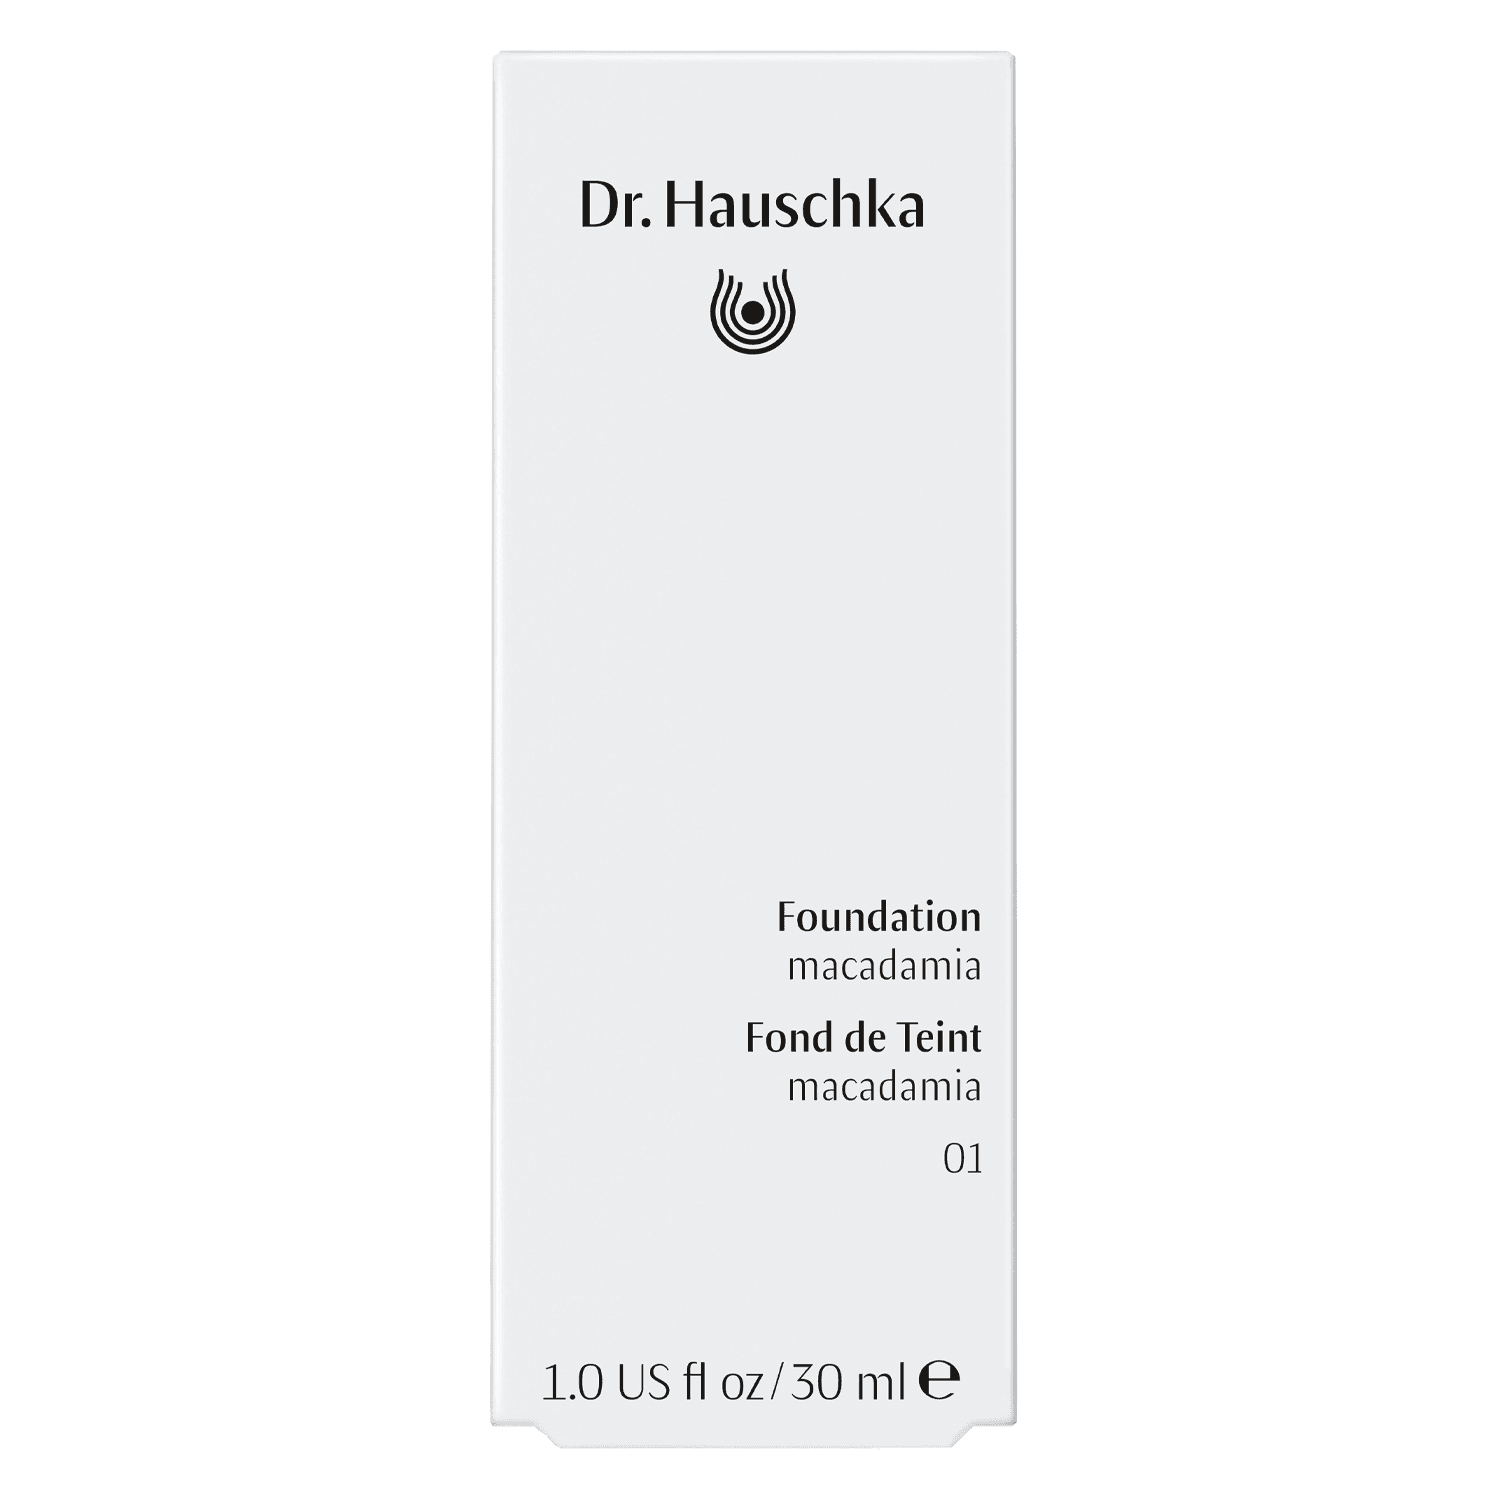 Dr. Hauschka Teint - Fond de Teint macadamia 01